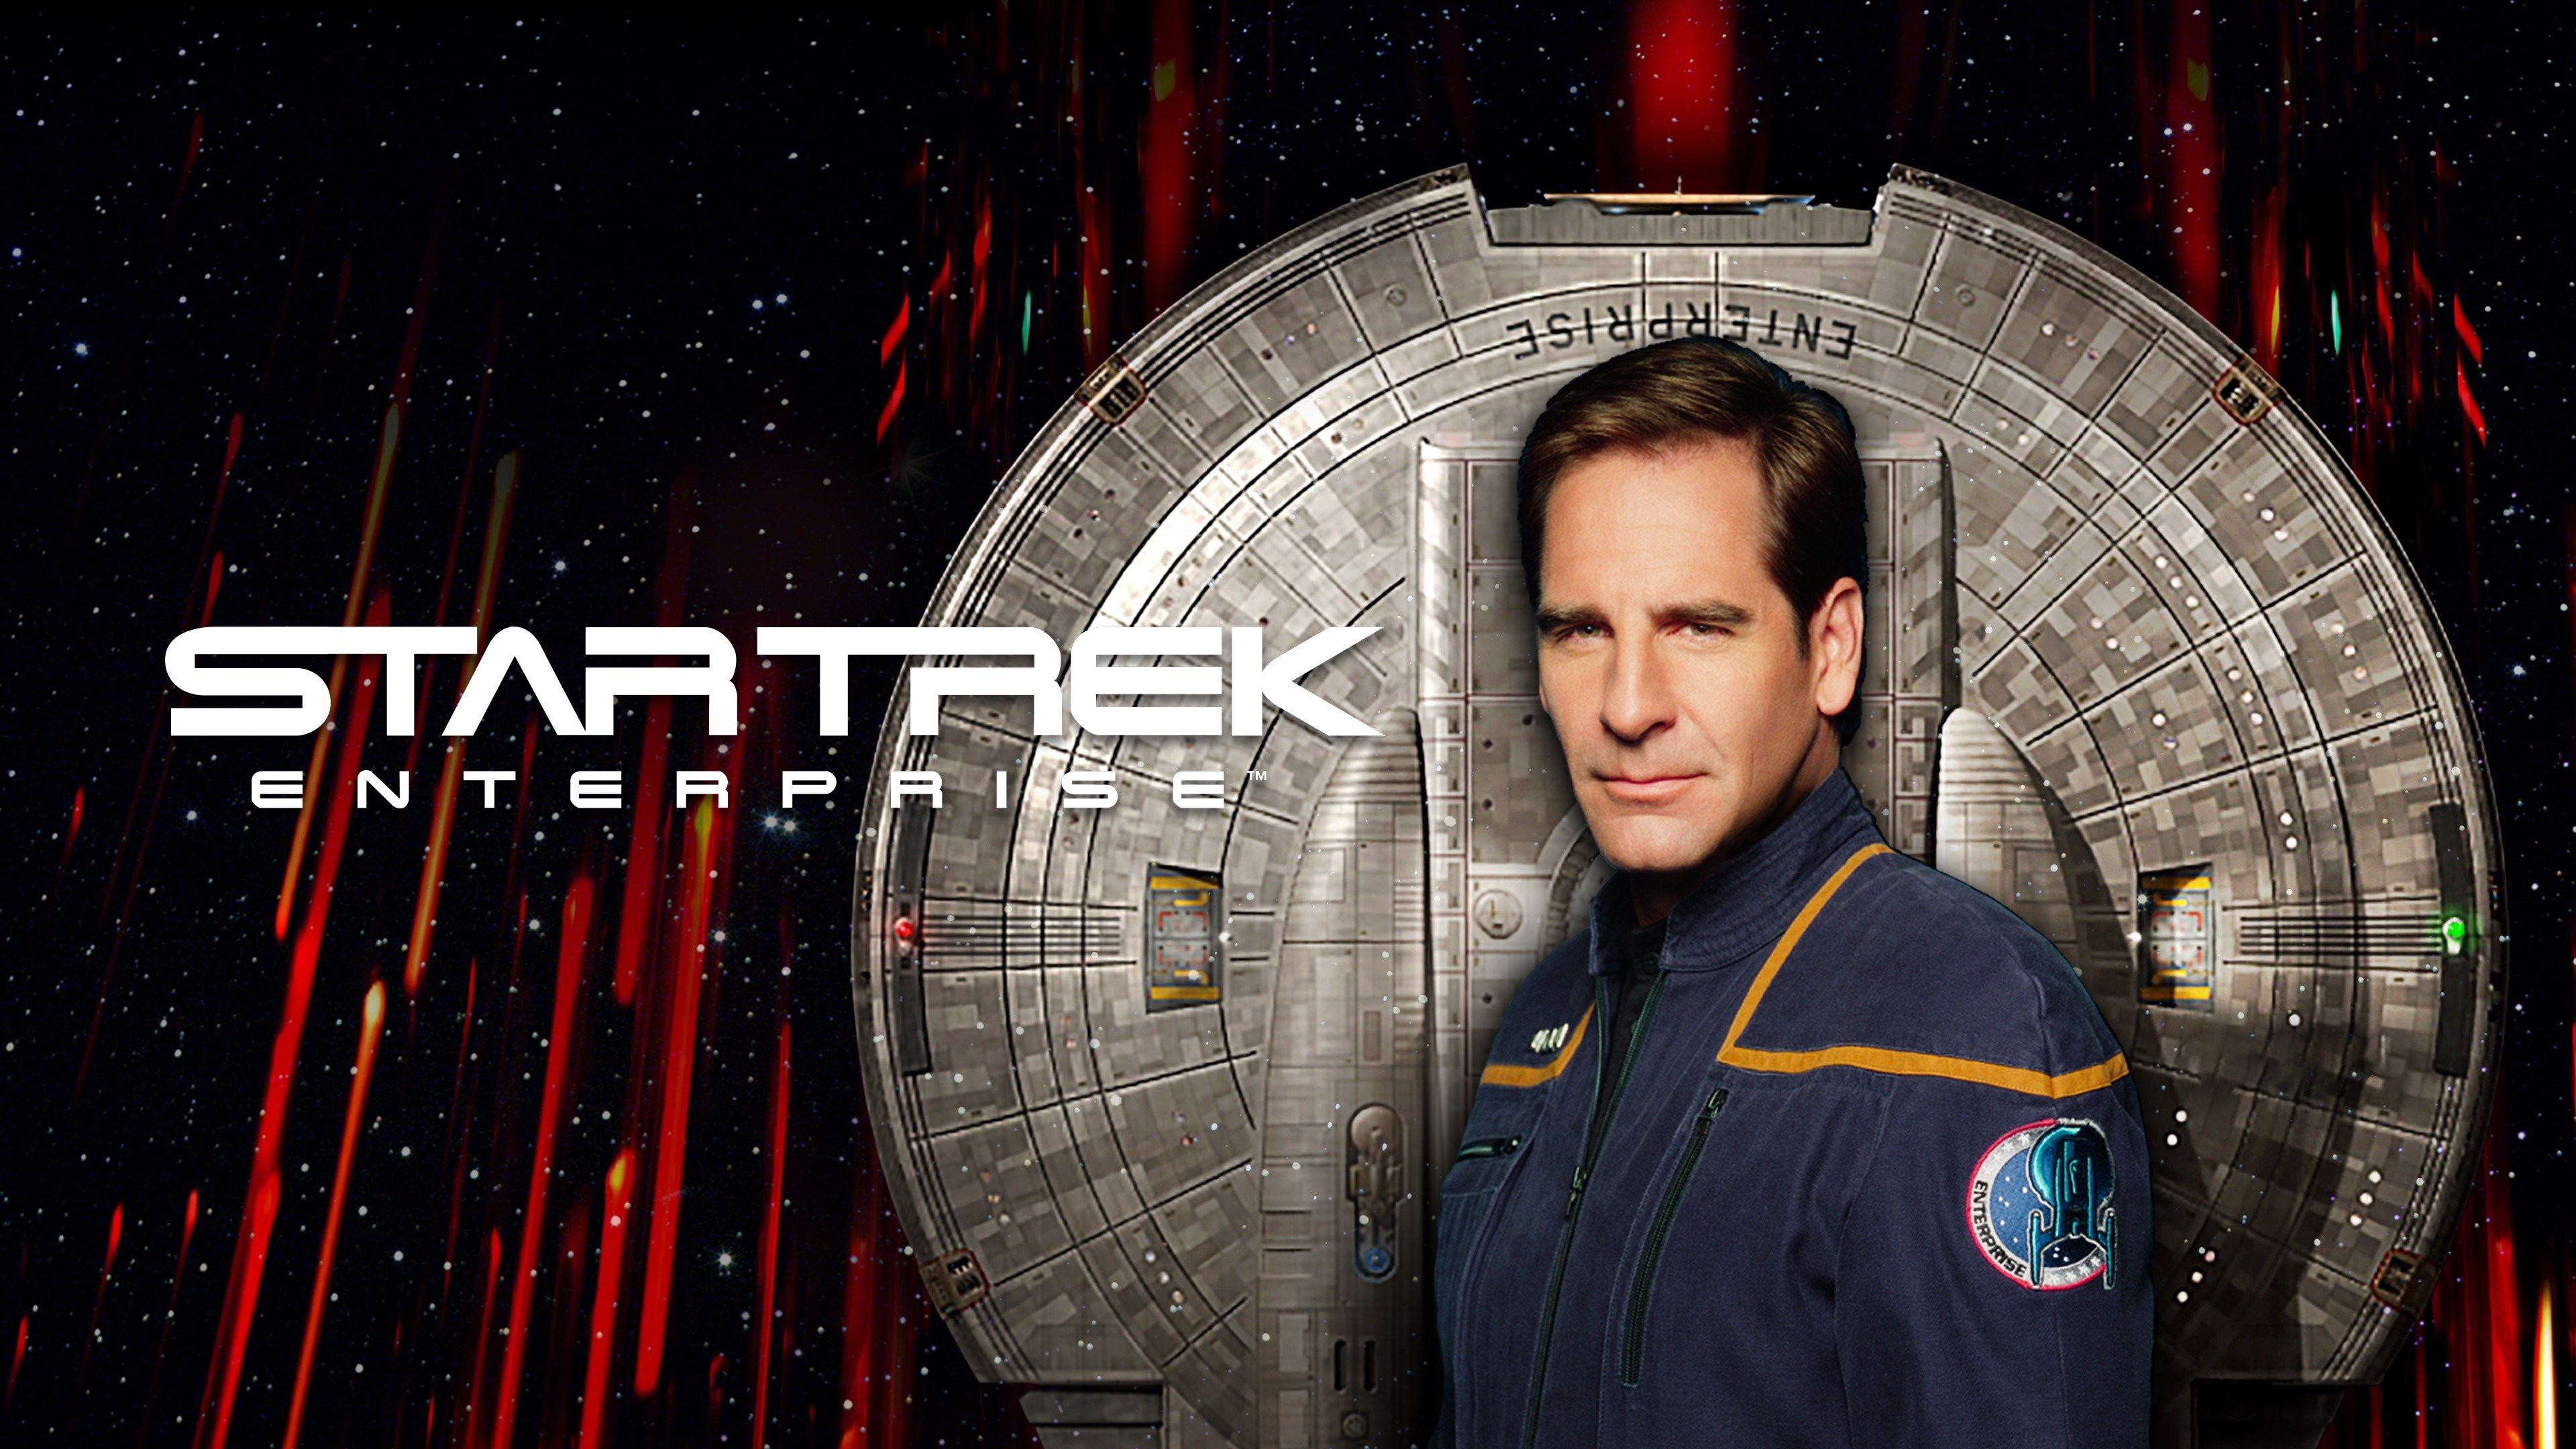 Star Trek: Enterprise Season 4